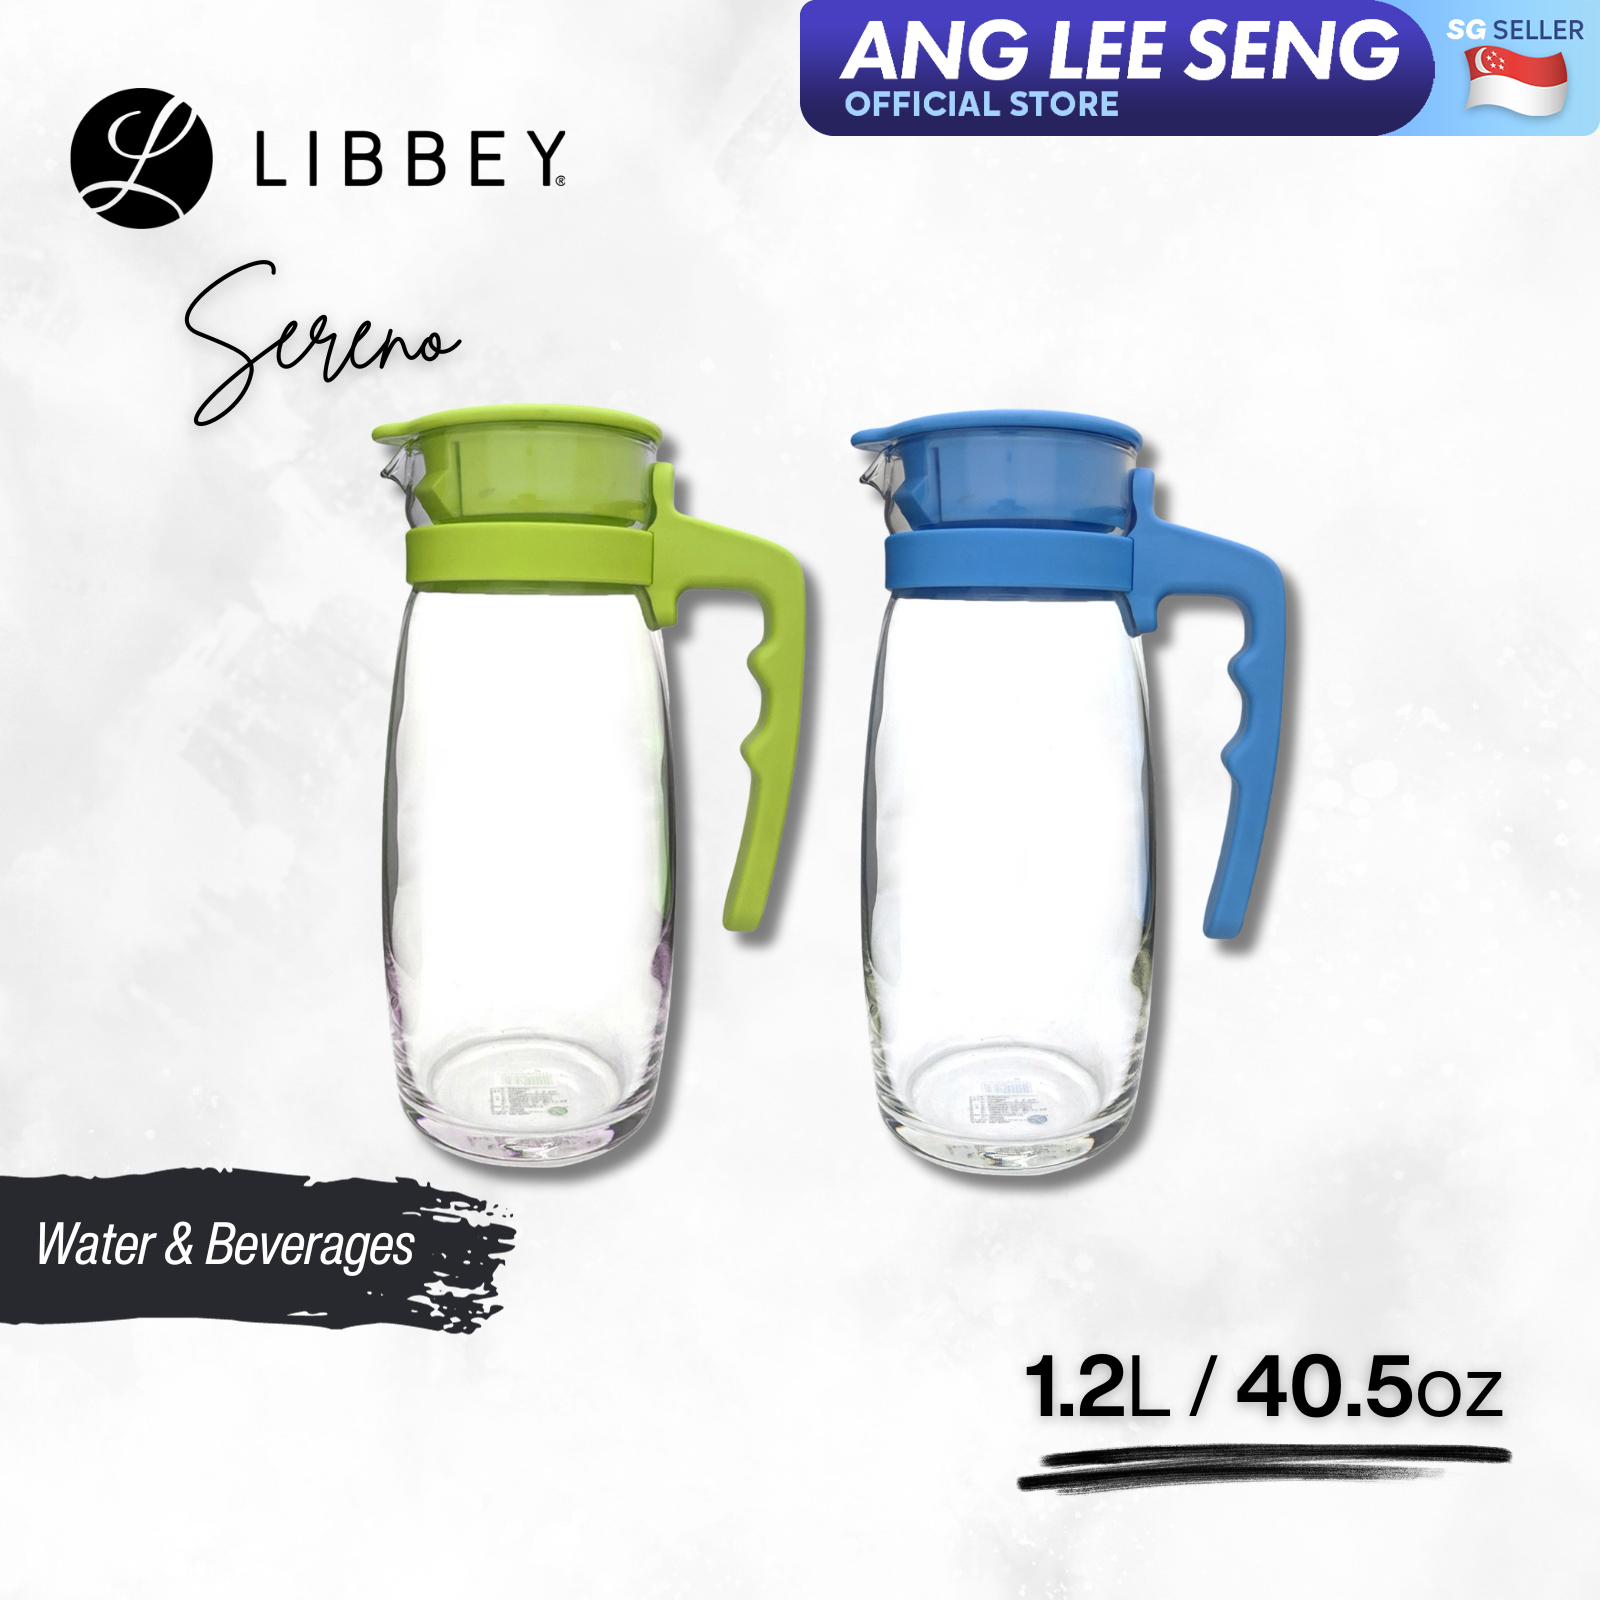 Libbey Sereno Glass Pitcher Jug 1.2L/40.5oz